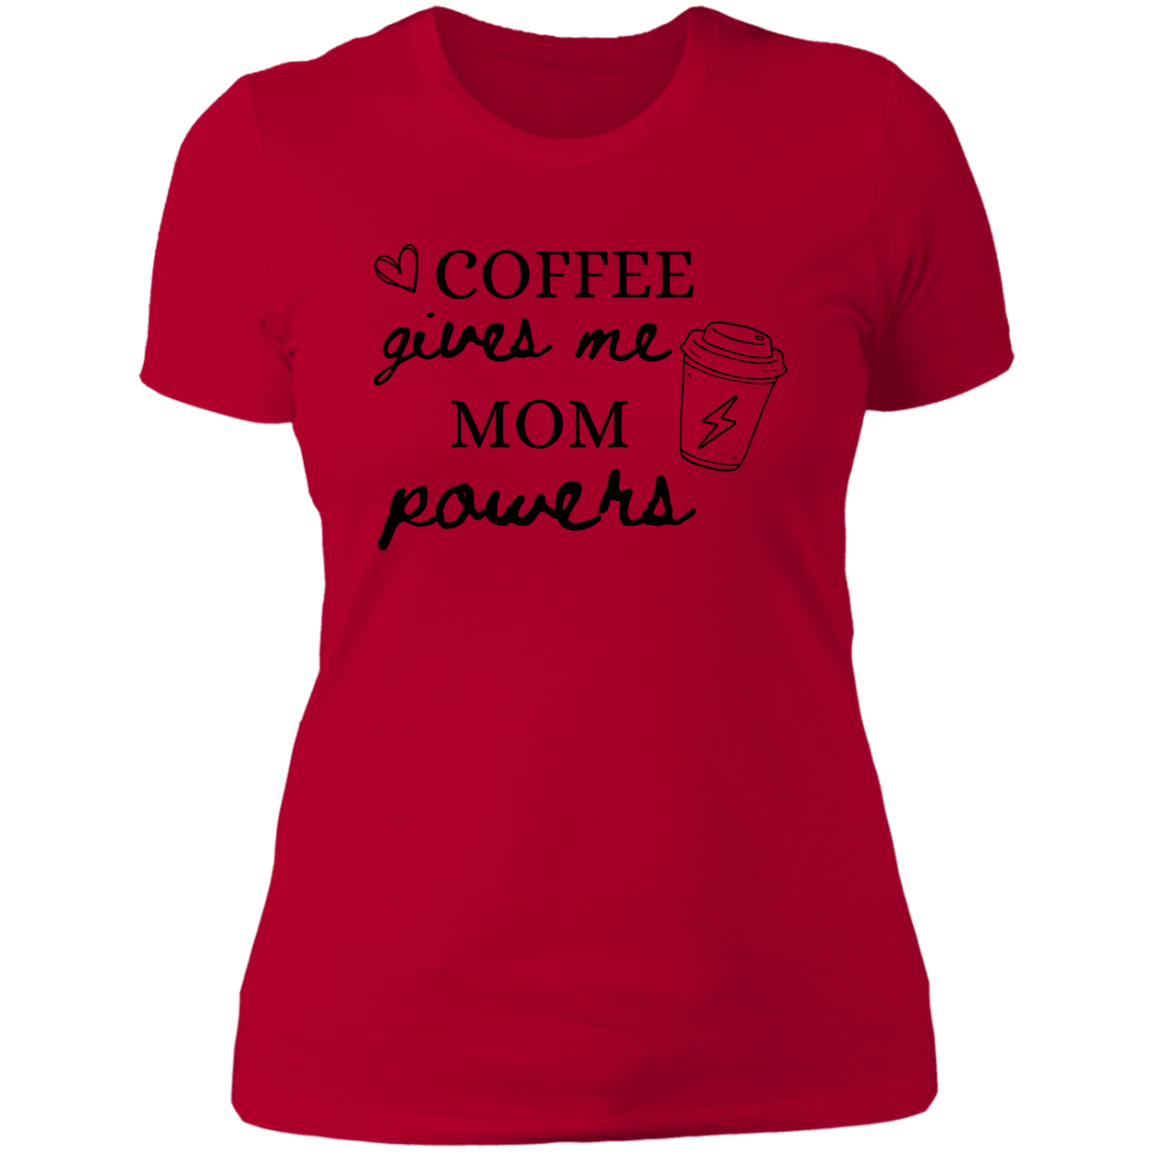 COFFEE GIVES ME MOM POWERS